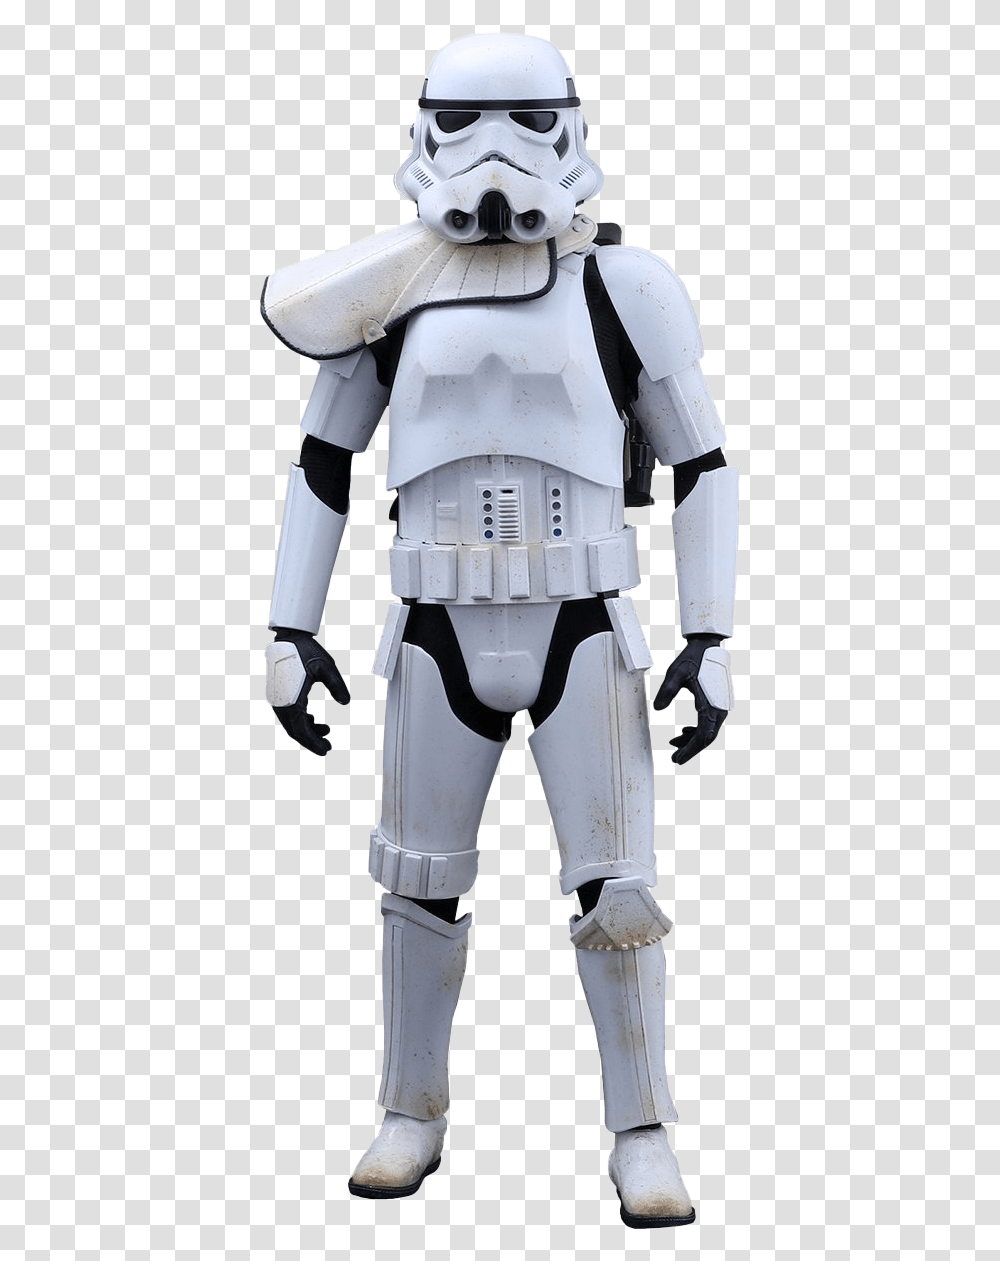 Imperial Stormtrooper Image Stormtrooper, Robot, Helmet, Apparel Transparent Png